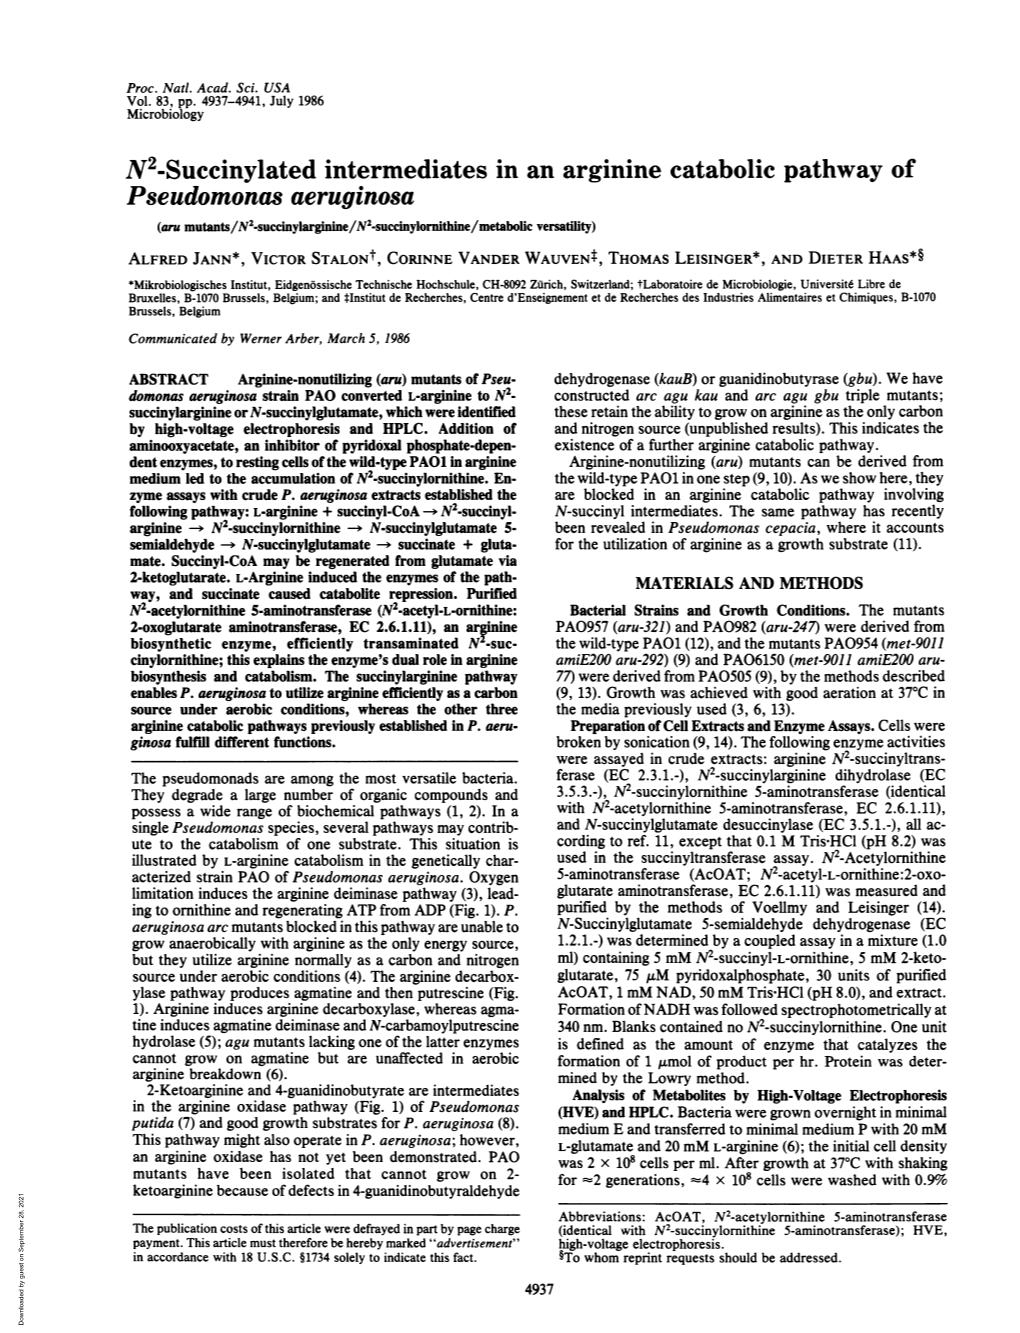 N2-Succinylated Intermediates in an Arginine Catabolic Pathway Of